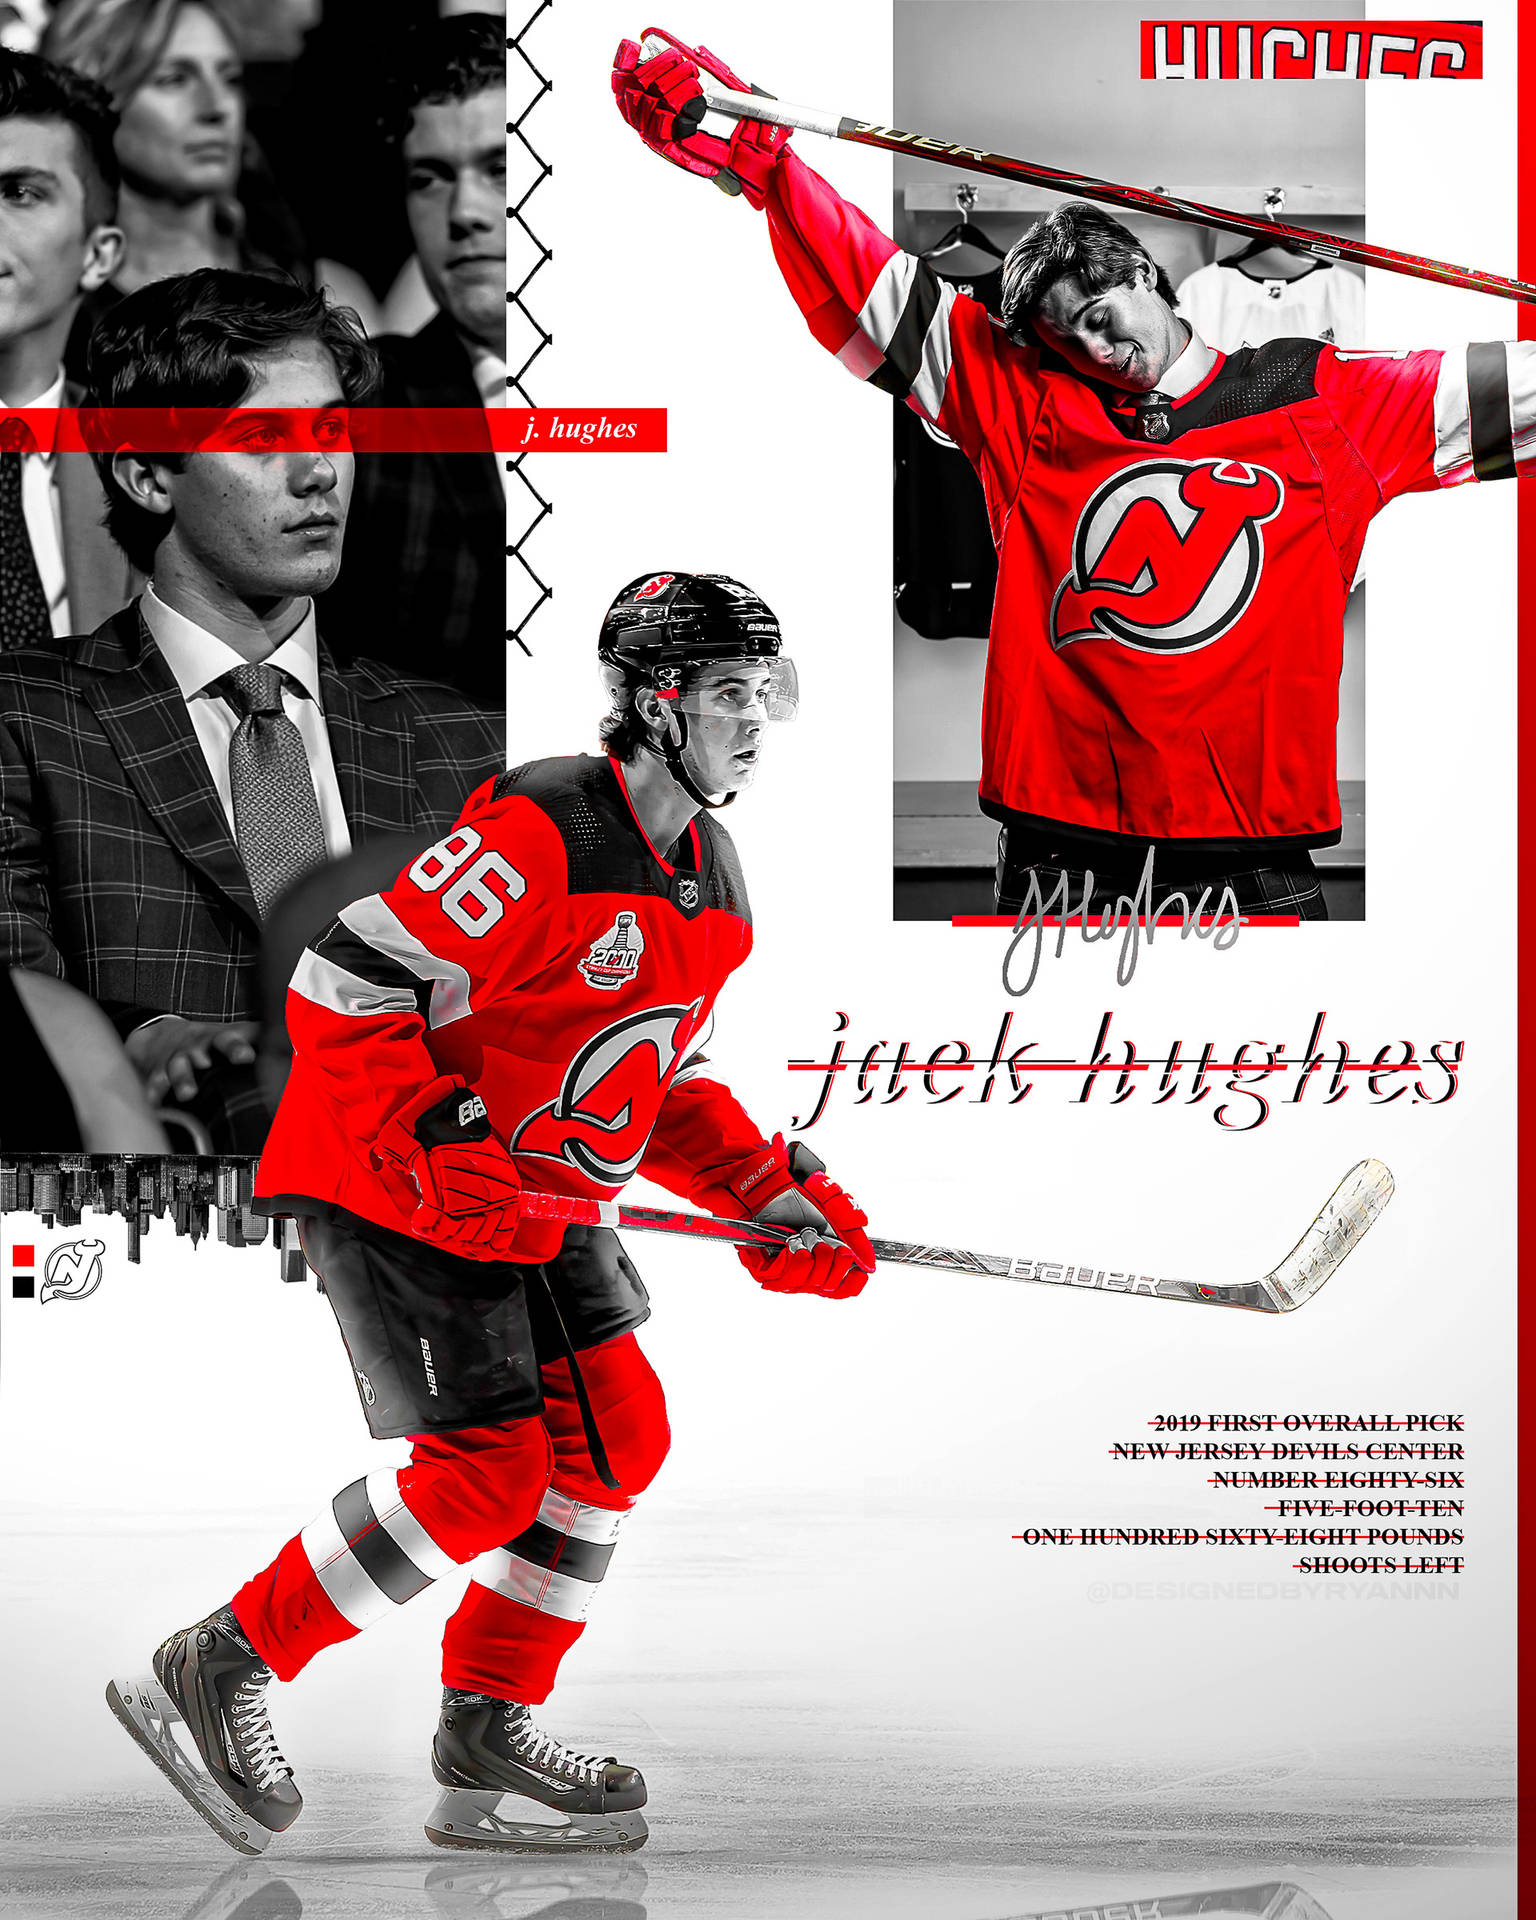 Jack Hughes Ice Hockey Player Wallpaper